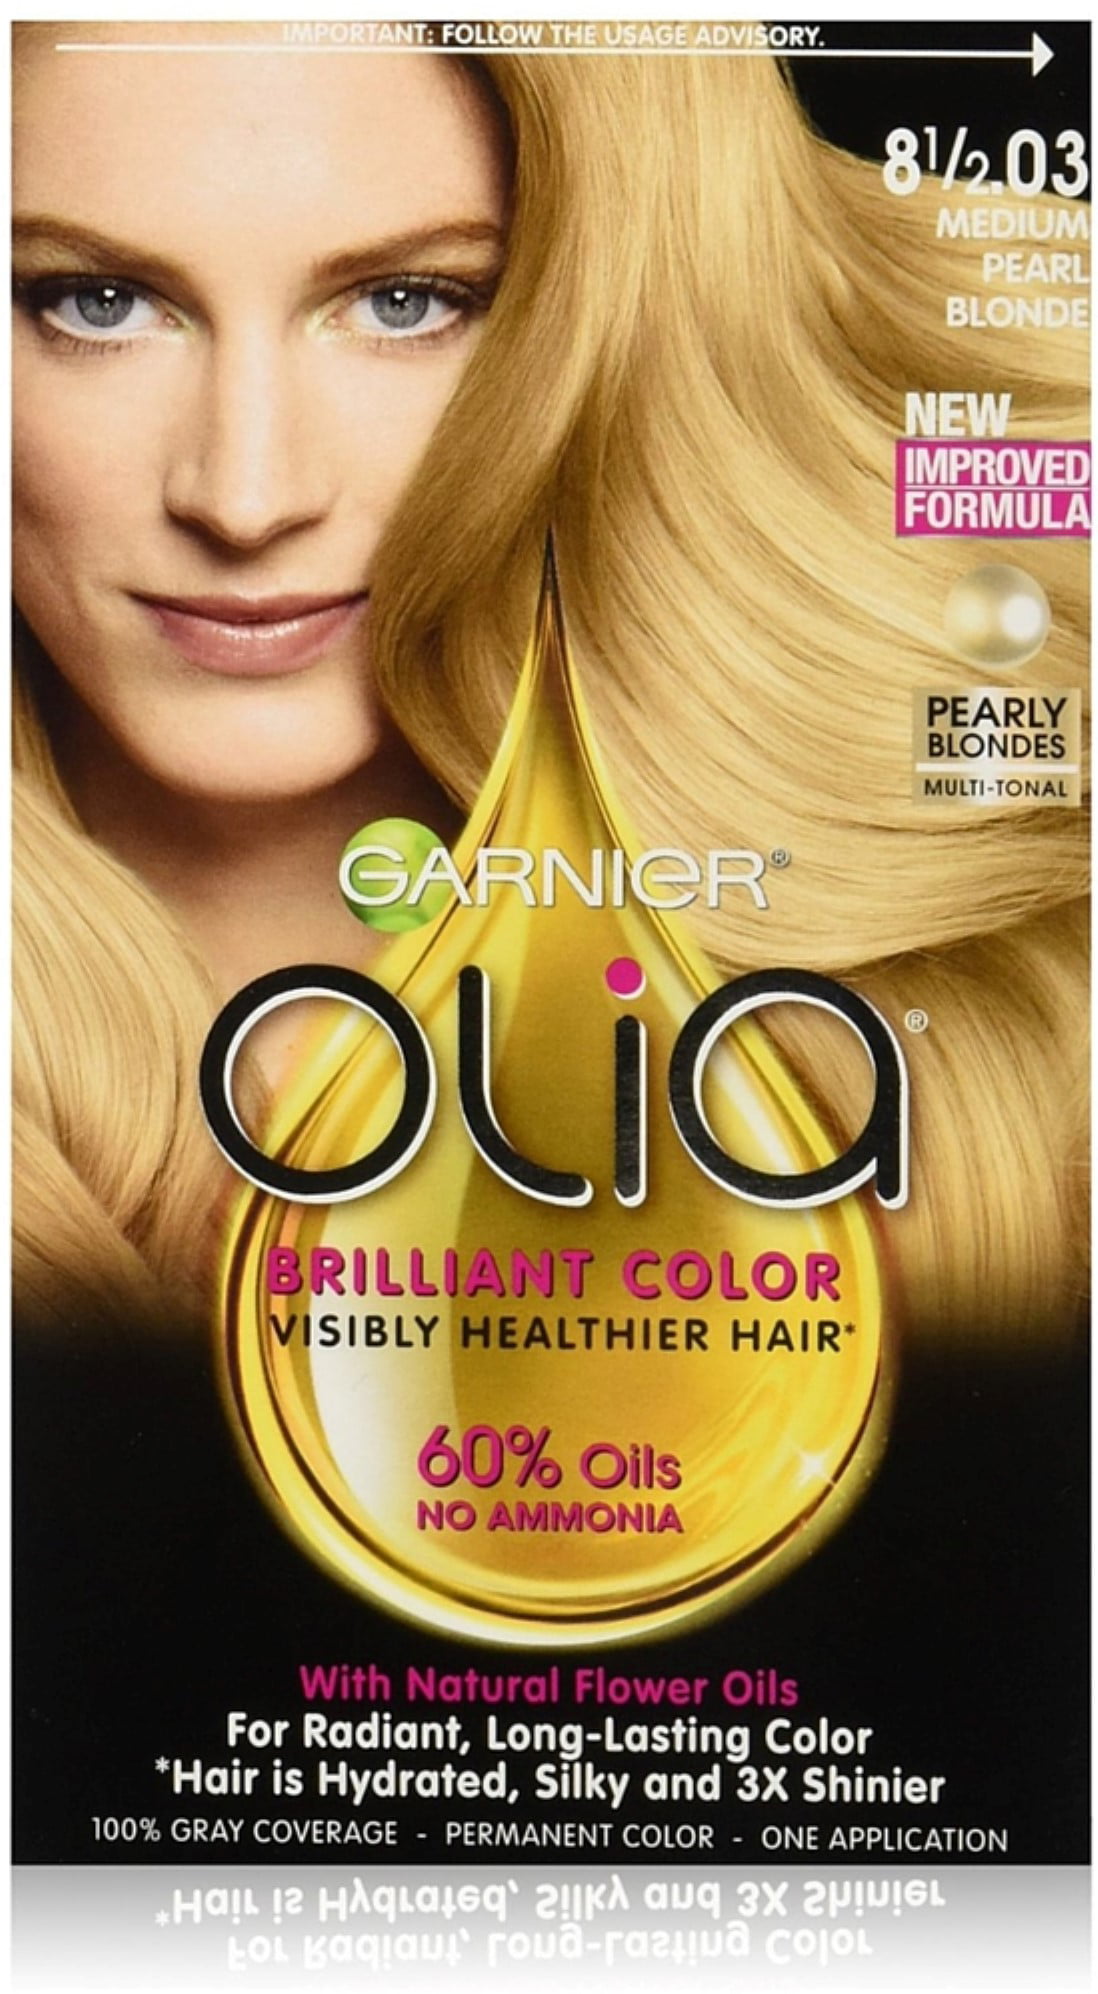 garnier-olia-permanent-hair-color-medium-pearl-blonde-8-5-03-1-ea